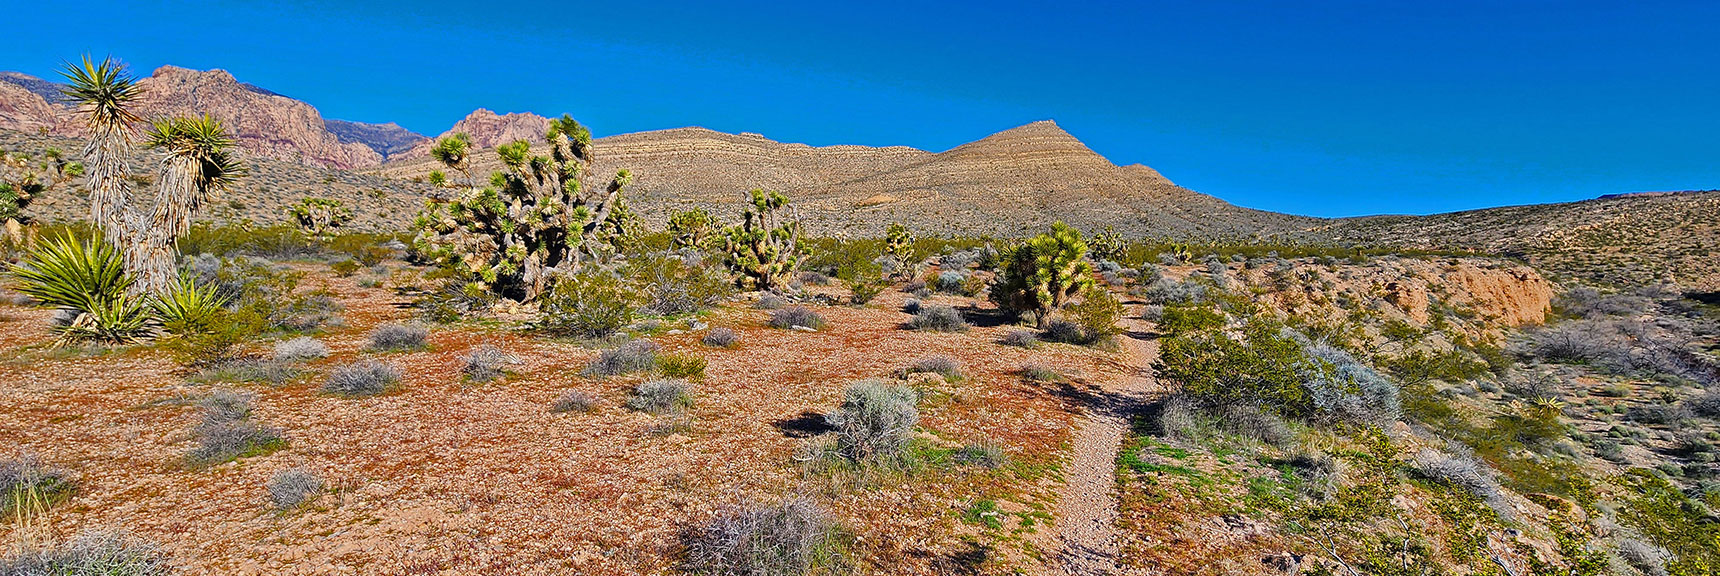 Cross Hwy 159, Head Up a Wash. Trail Soon Ascends to Left Edge of Wash. | Western High Ridge | Blue Diamond Hill, Nevada